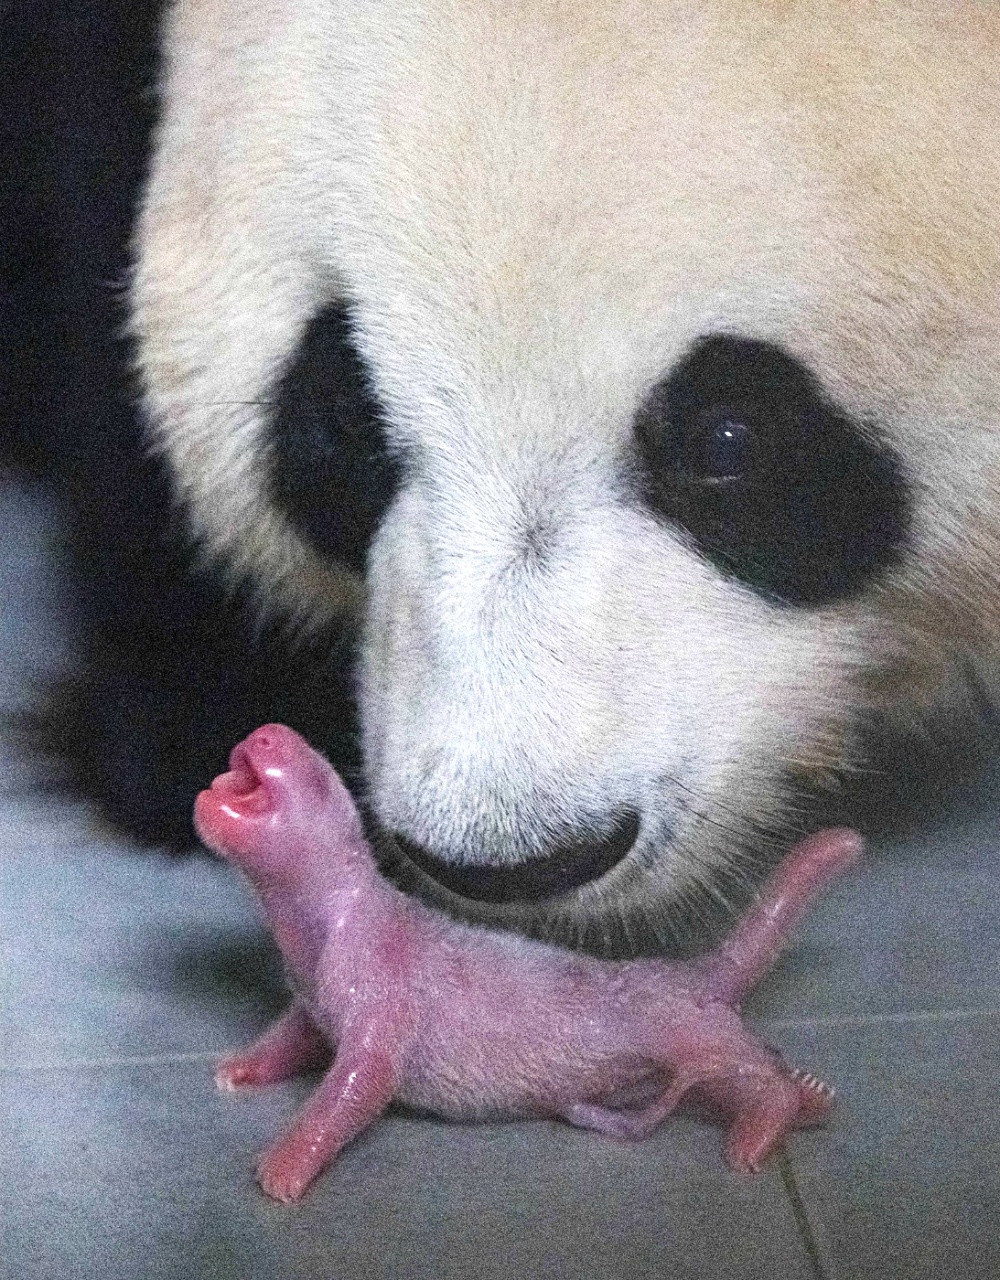 The mama panda and baby panda